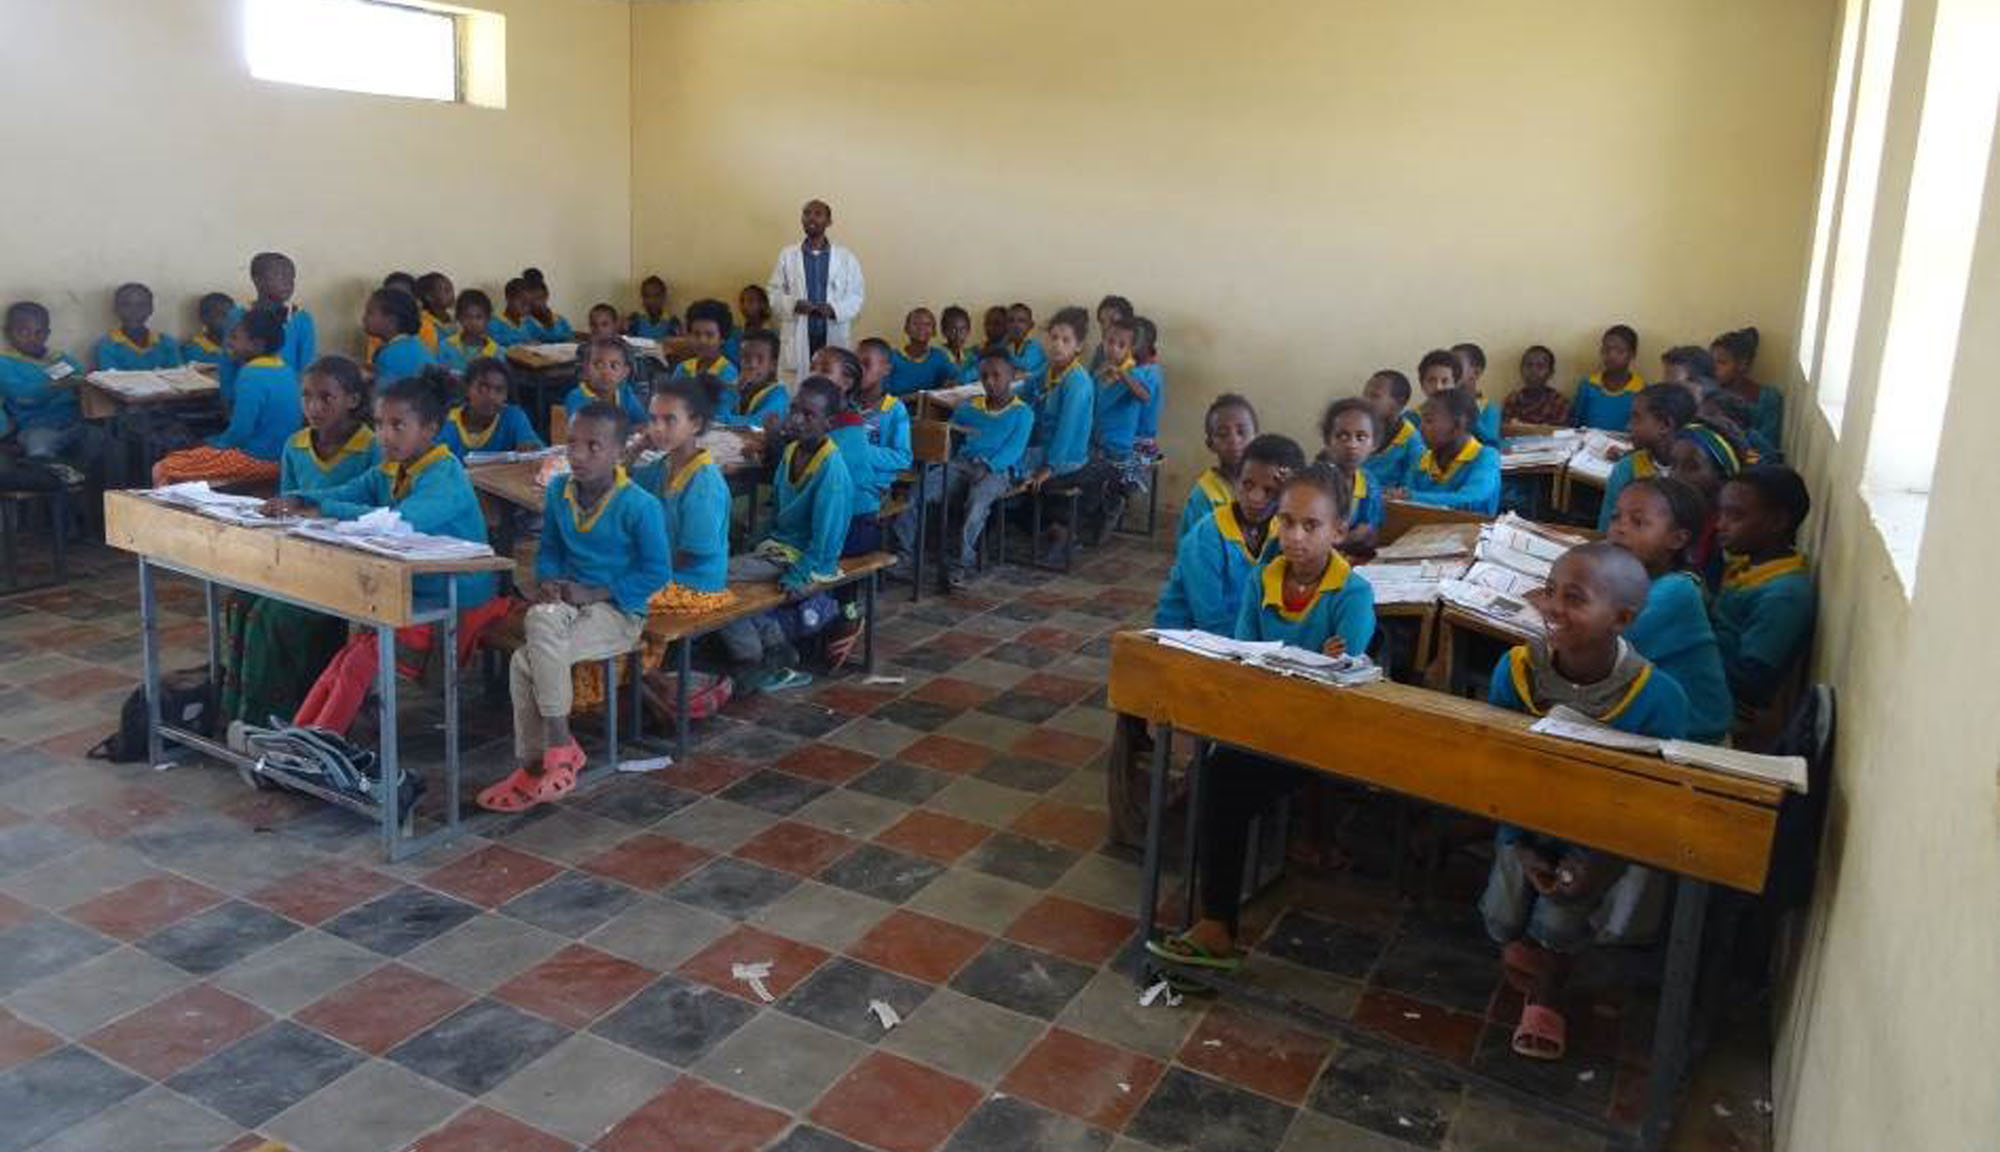 Proyecto Escuela Maernet Etiopía - Etiopia Utopia